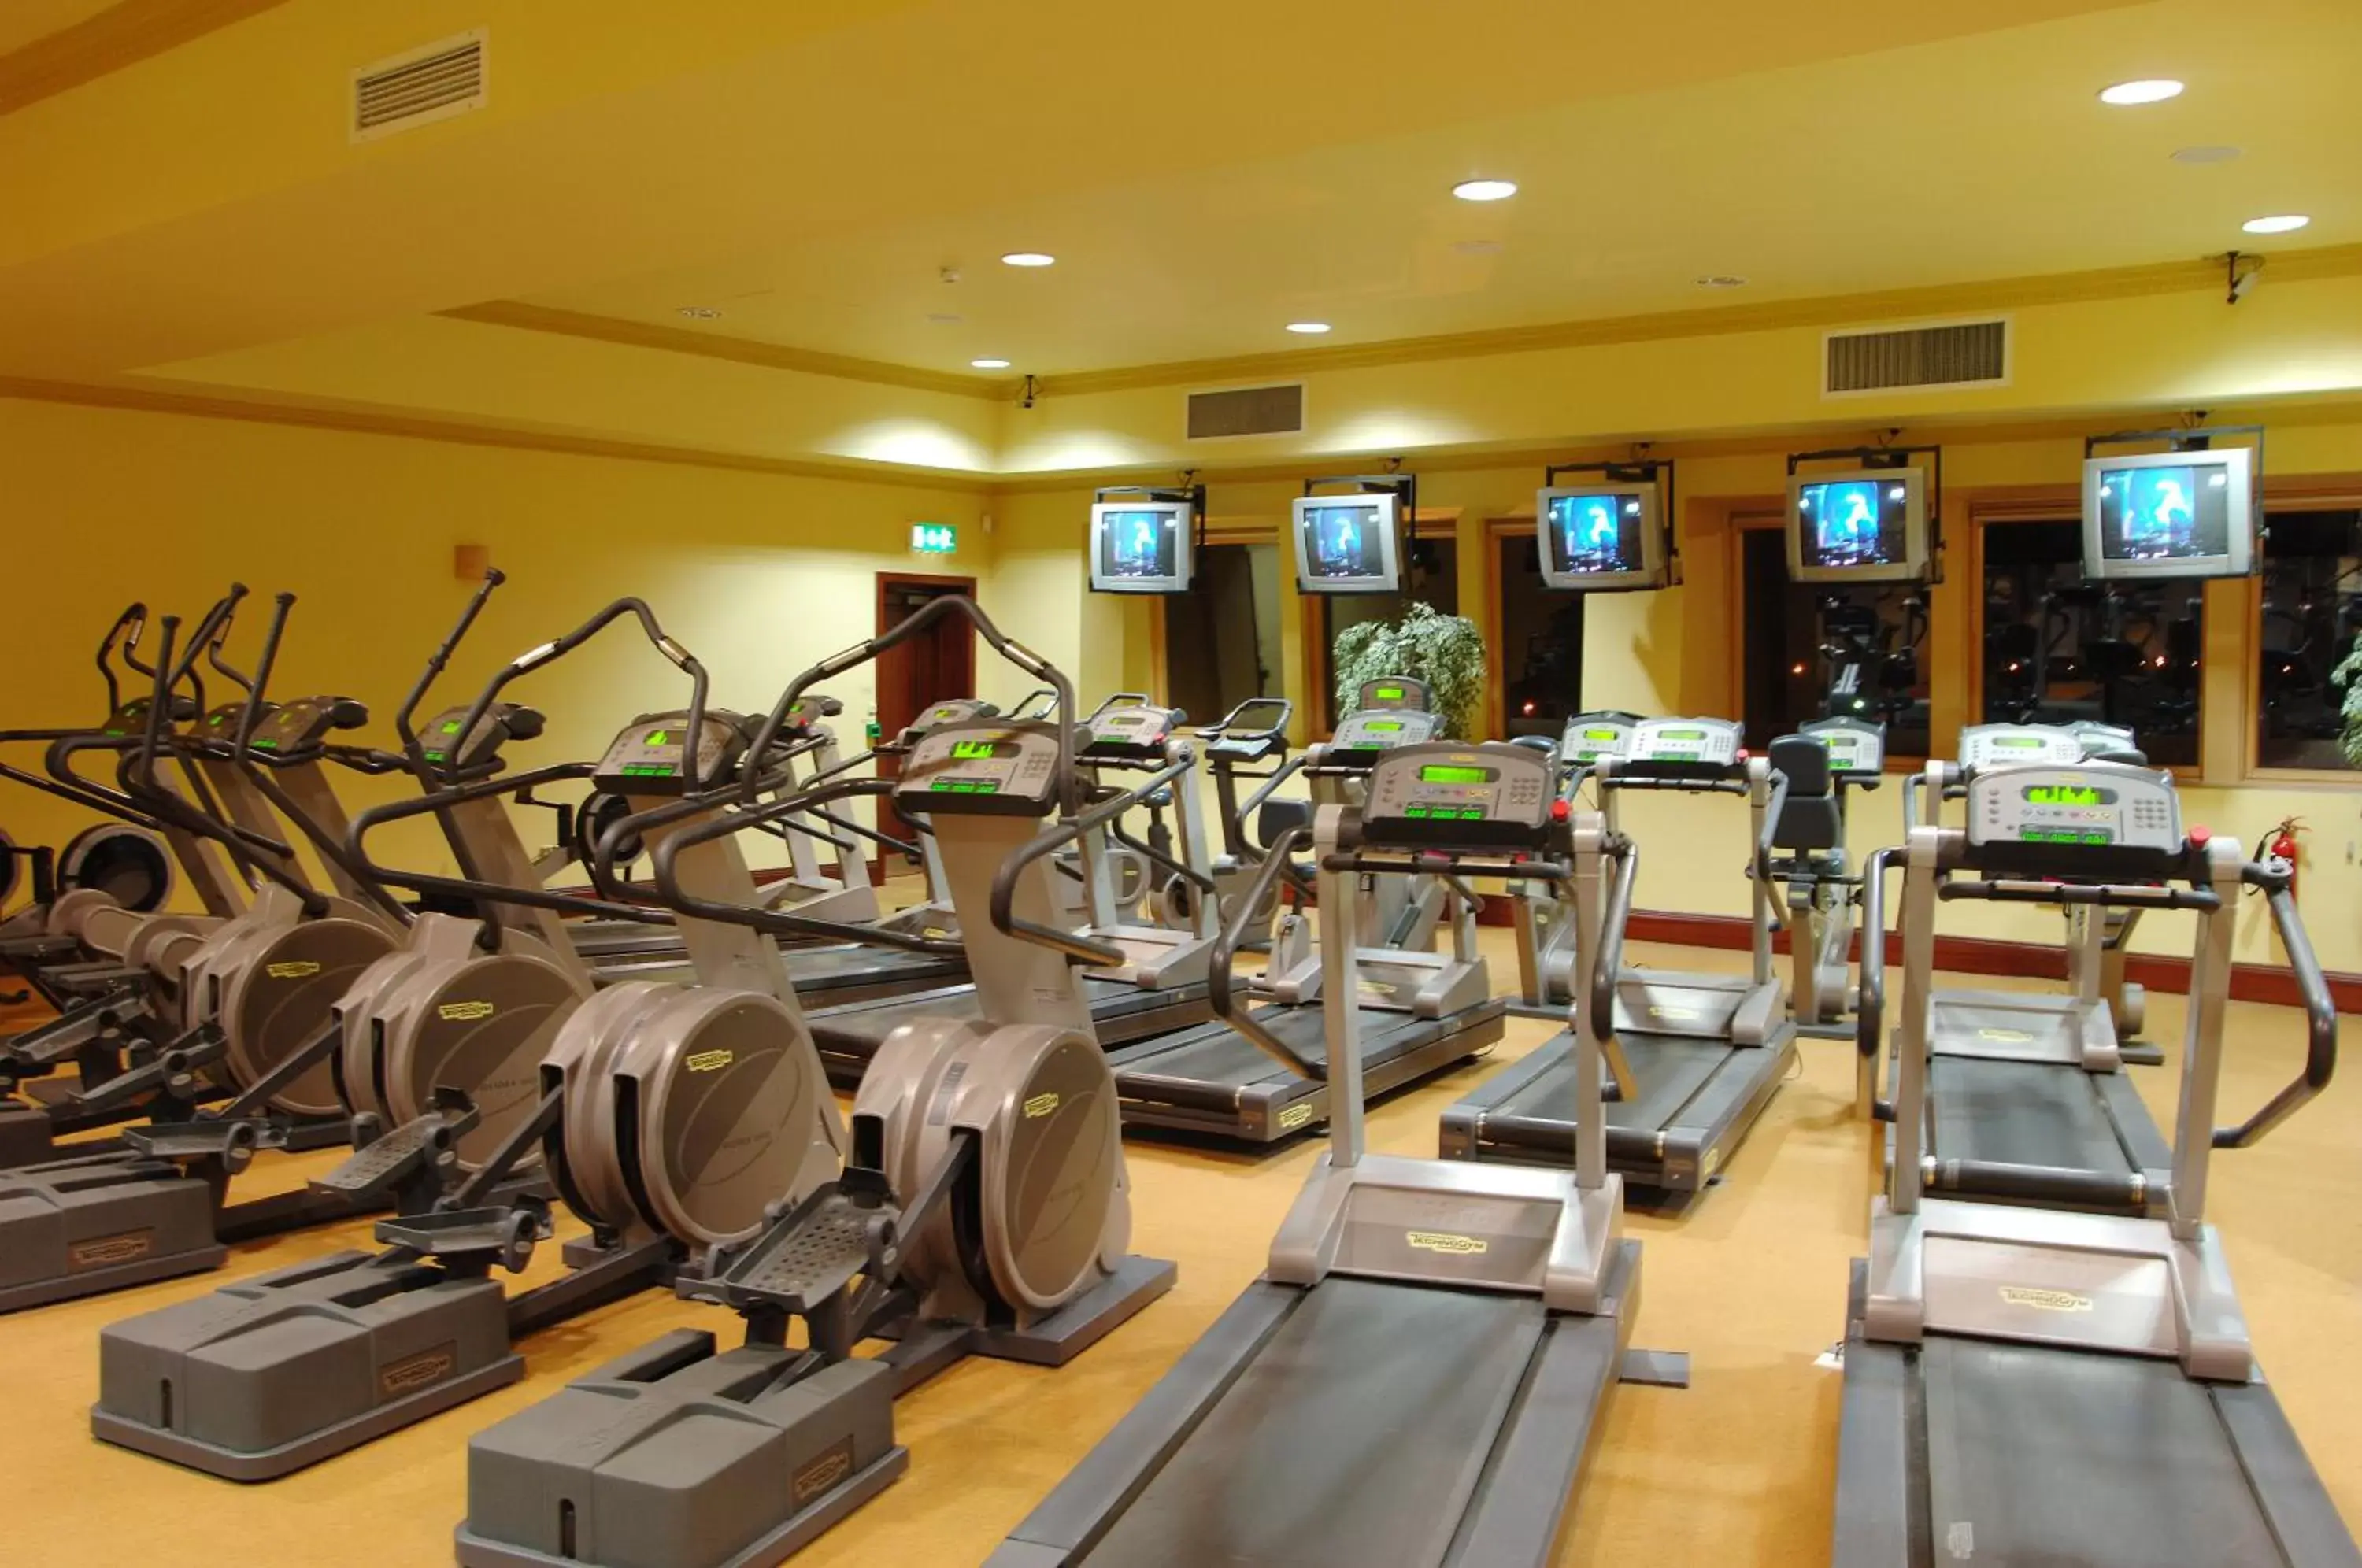 Fitness centre/facilities, Fitness Center/Facilities in Hibernian Hotel & Leisure Centre